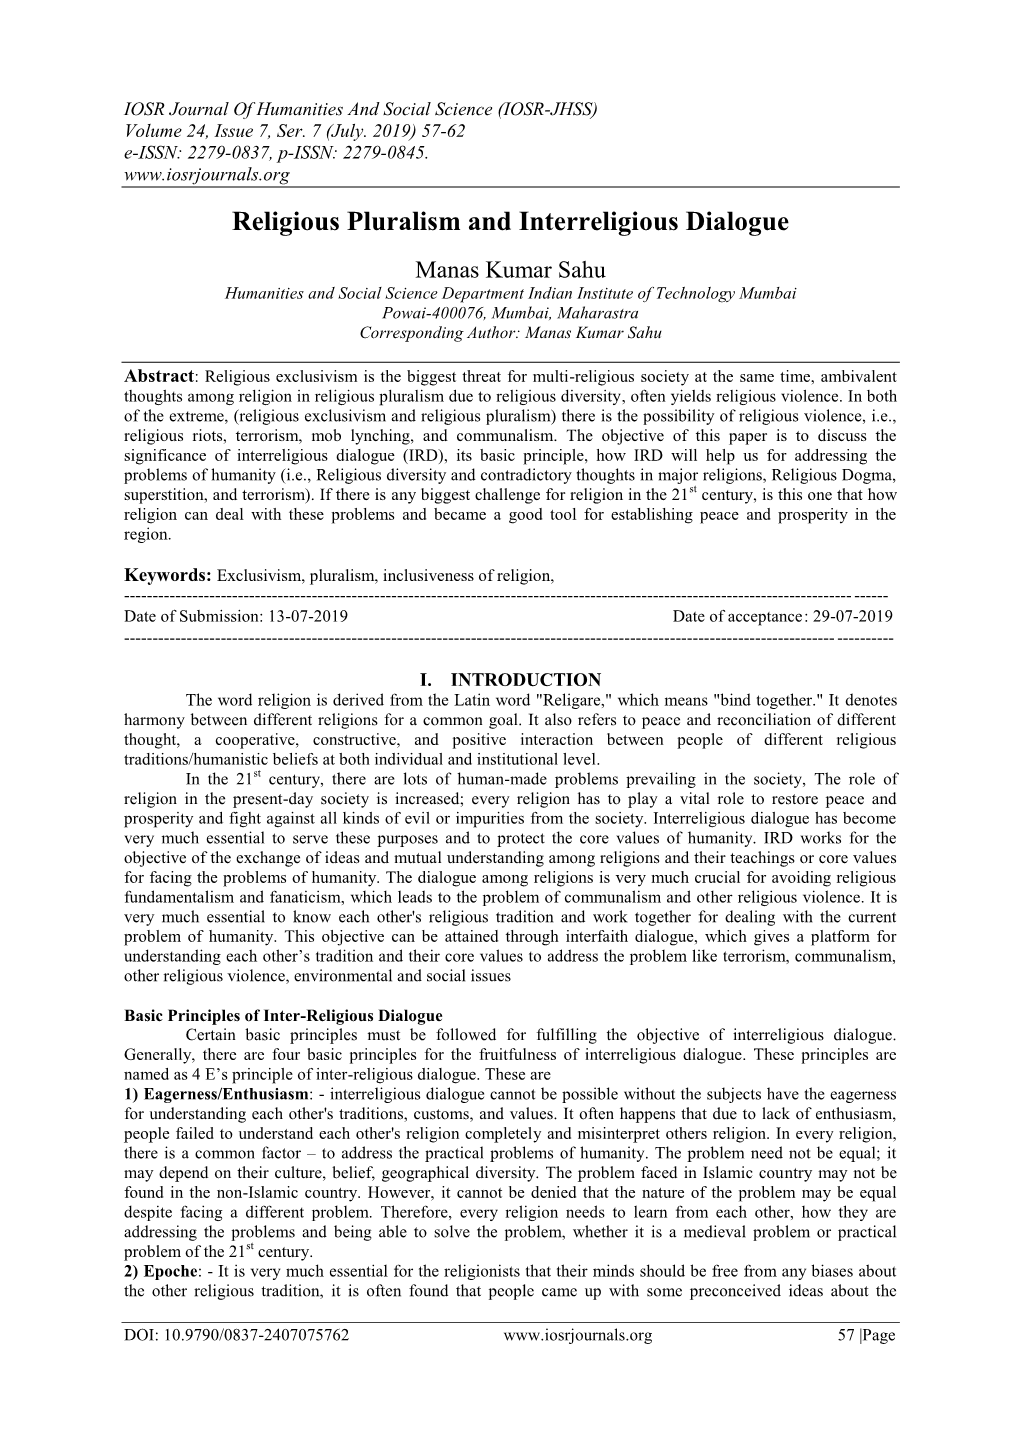 Religious Pluralism and Interreligious Dialogue